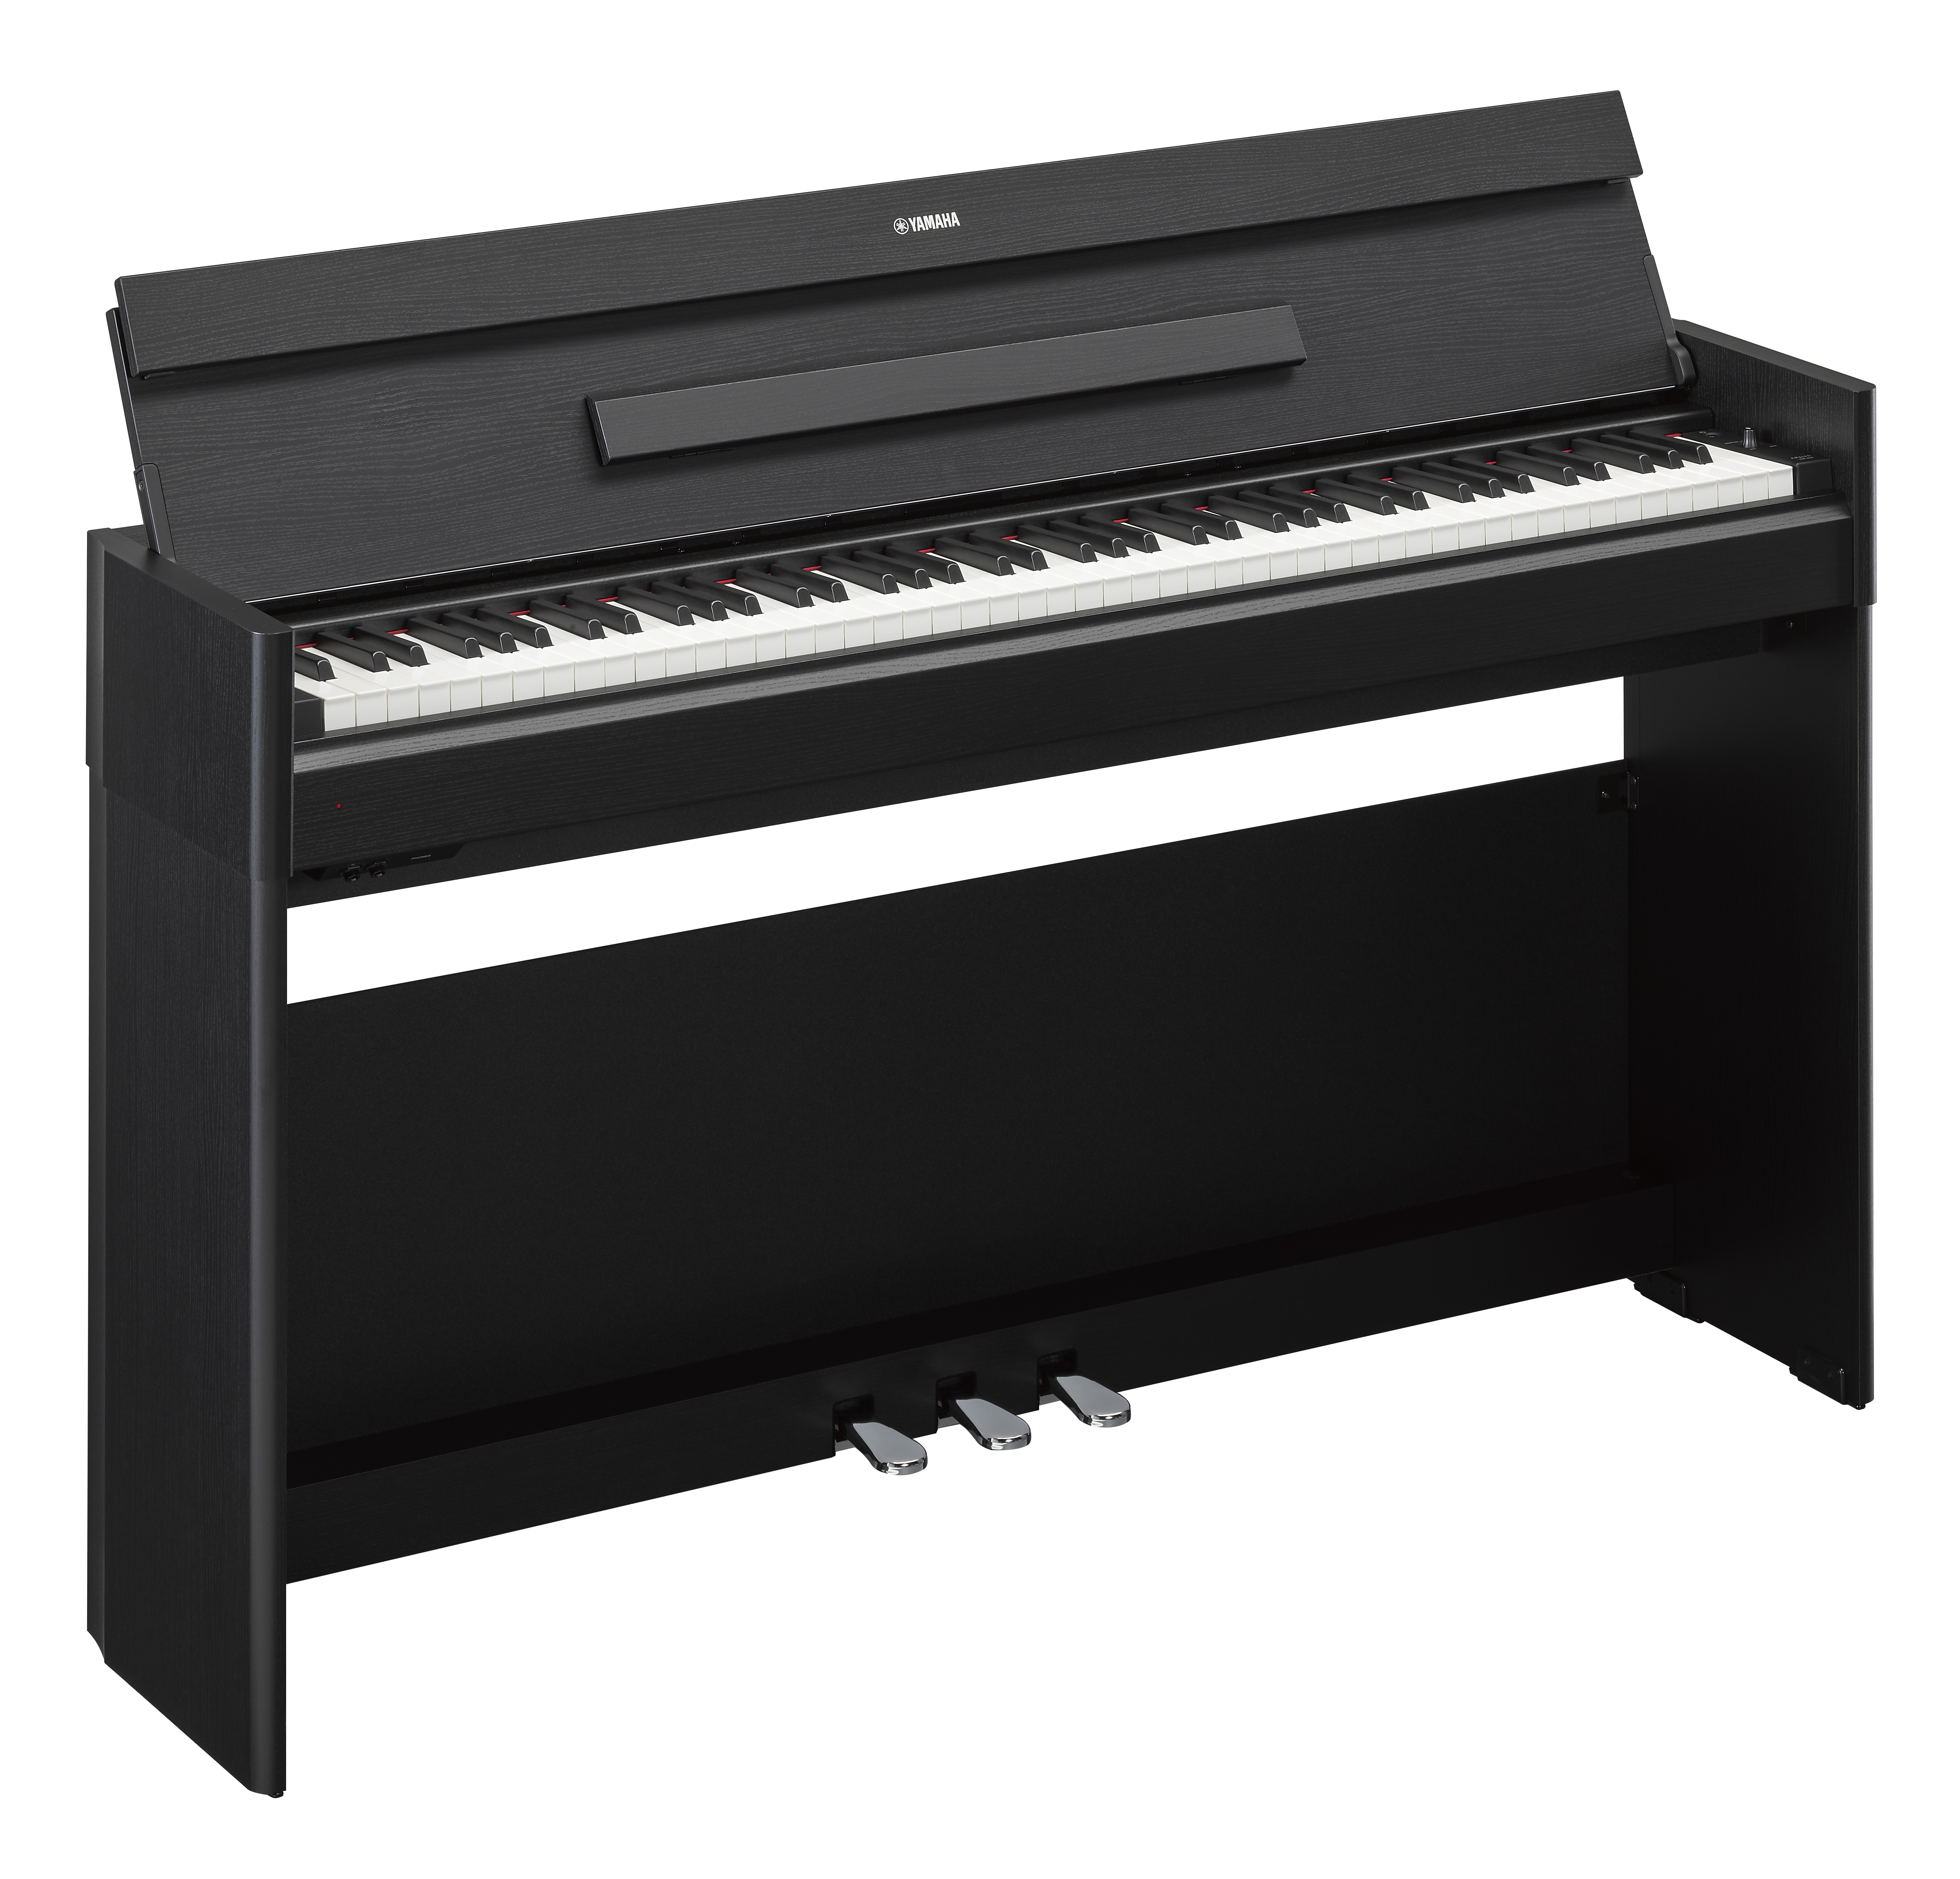 Yamaha Ydp-s54 - Black - Digitalpiano mit Stand - Variation 1